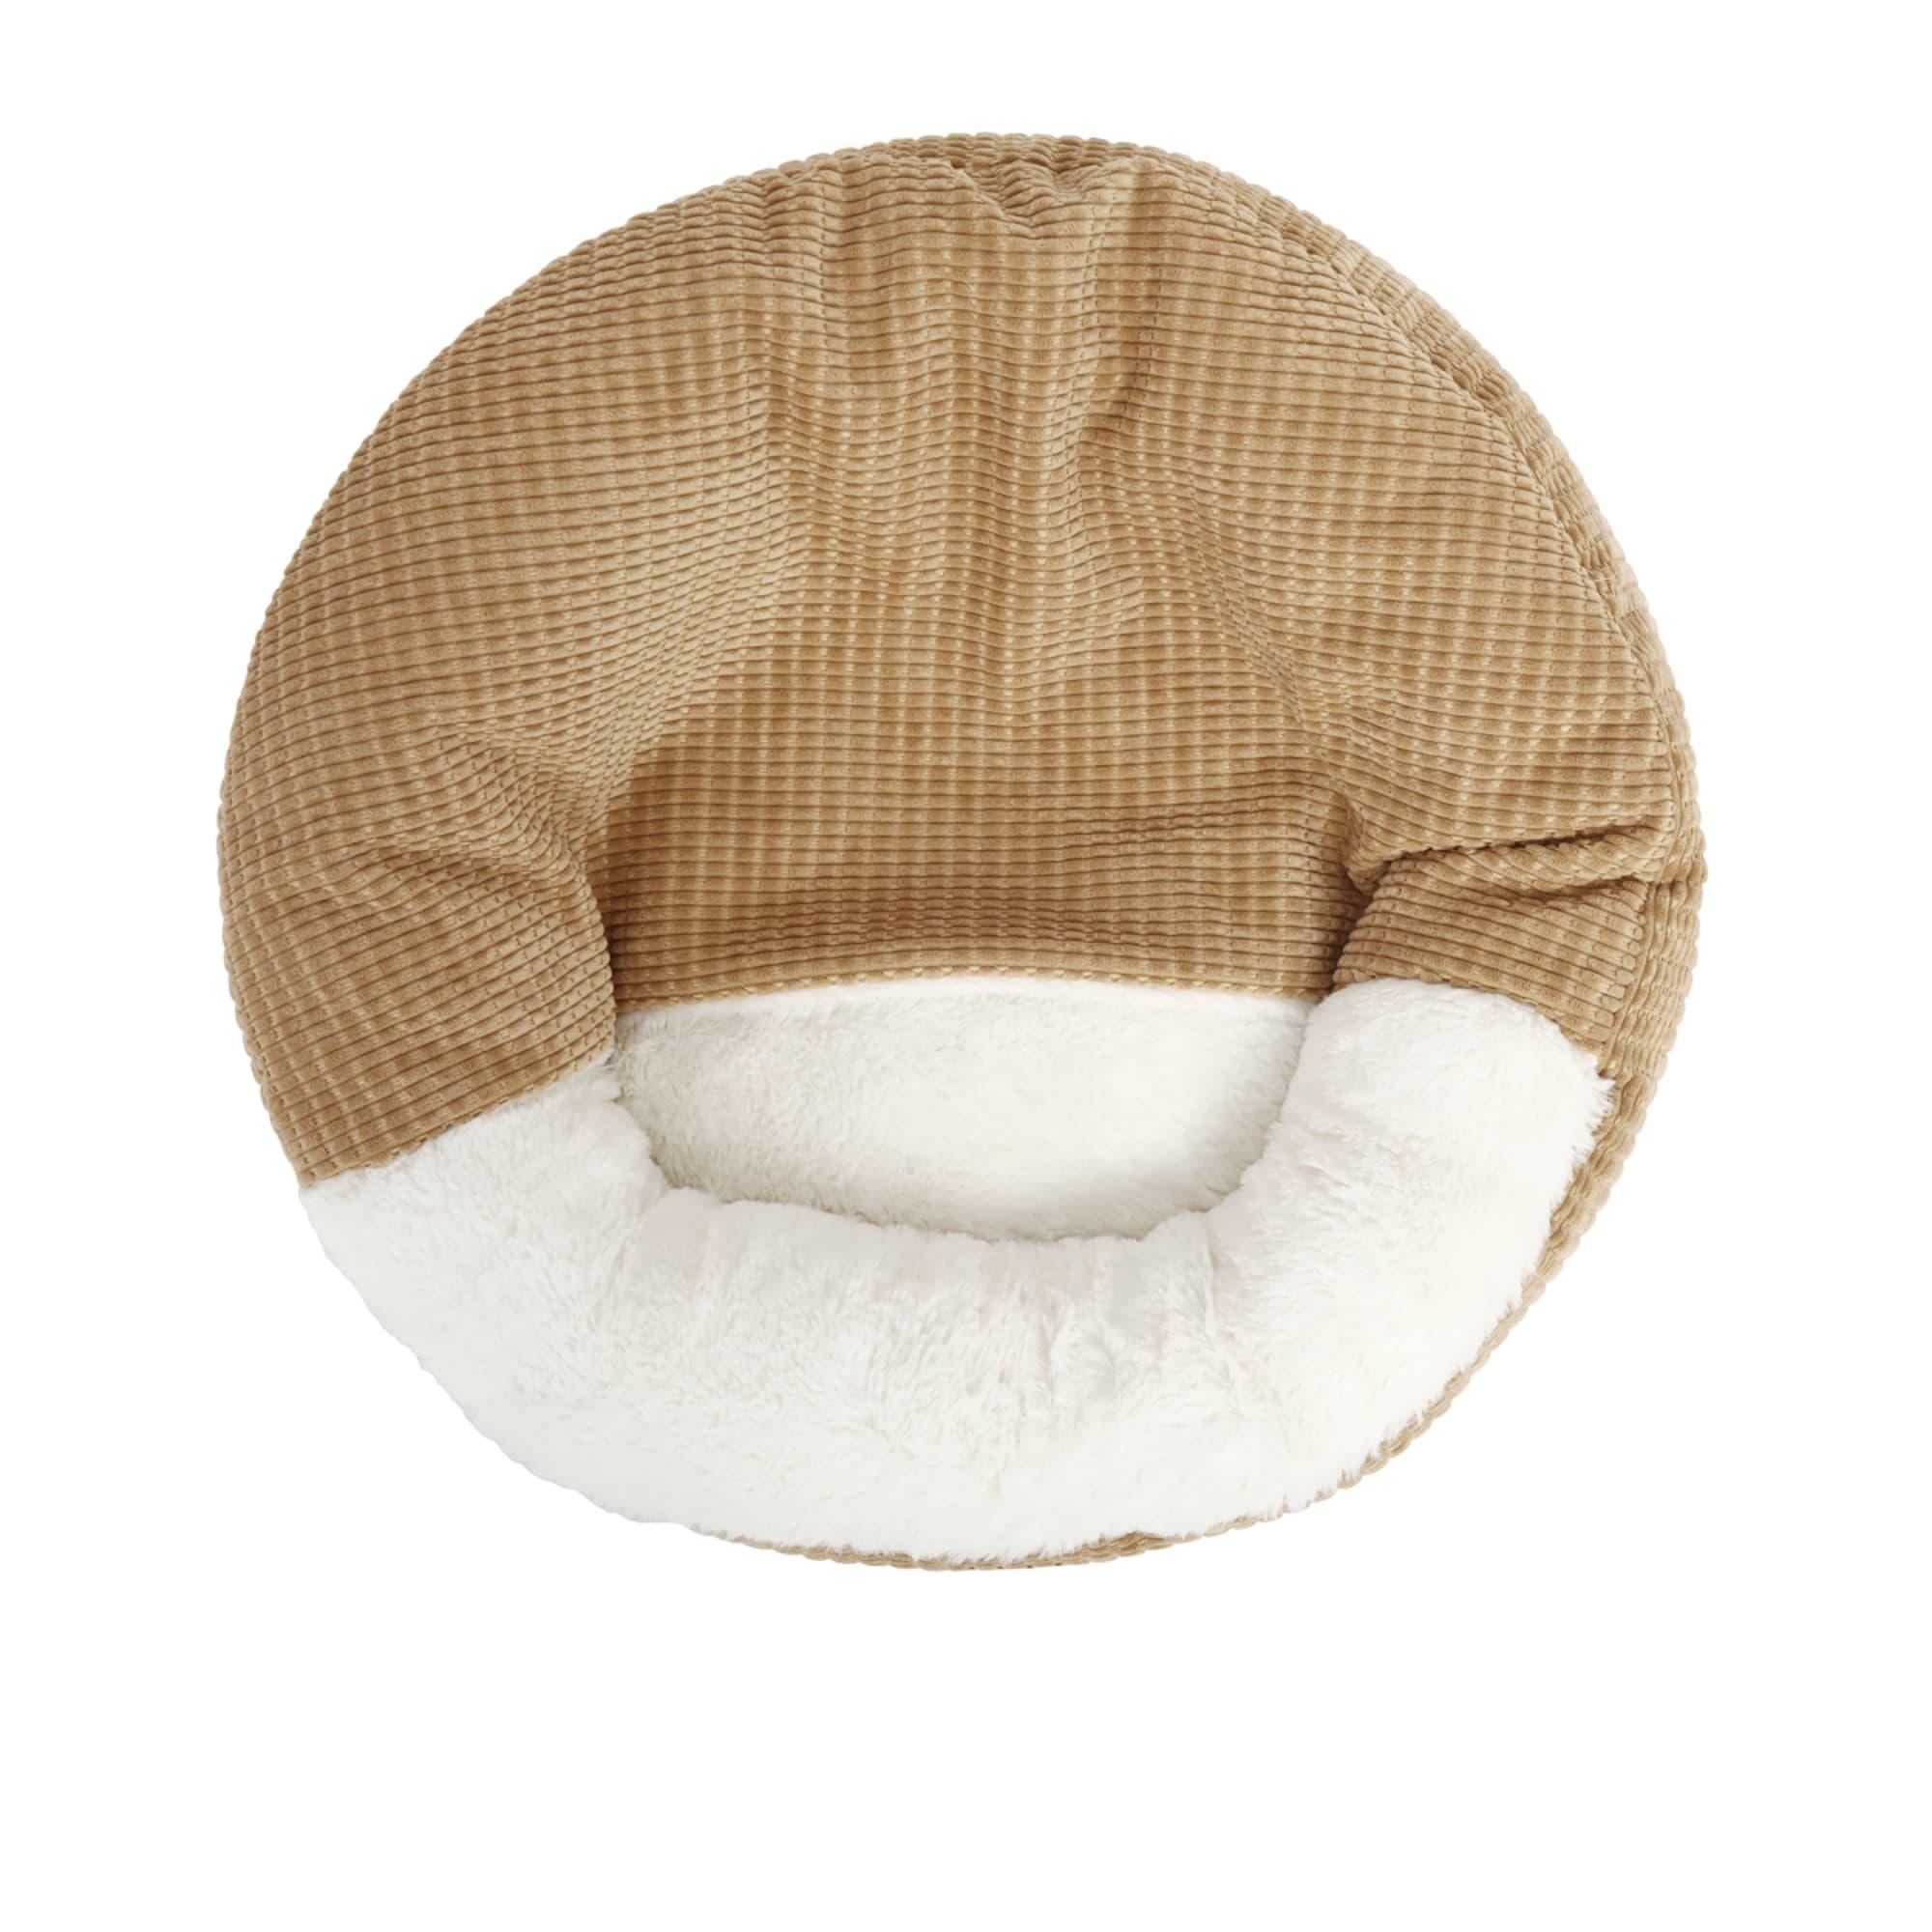 Charlie's Snookie Hooded Calming Dog Bed Medium Iced Coffee Brown Image 3